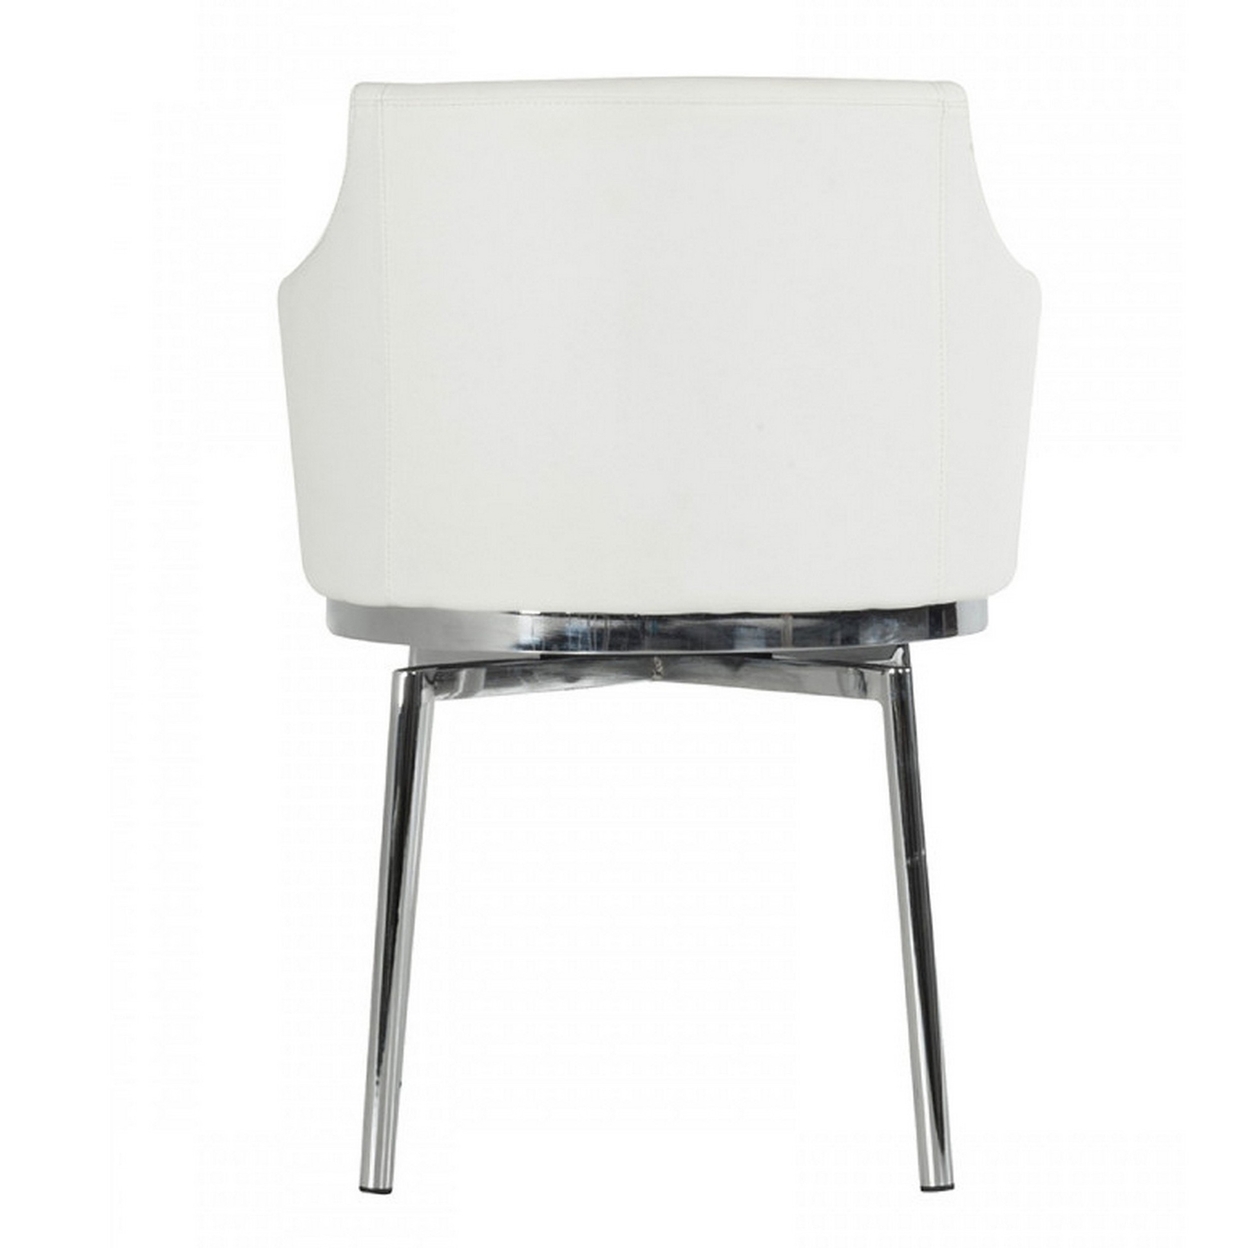 Leatherette Upholstered Swivel Dining Chair With Chrome Metal Legs, White- Saltoro Sherpi